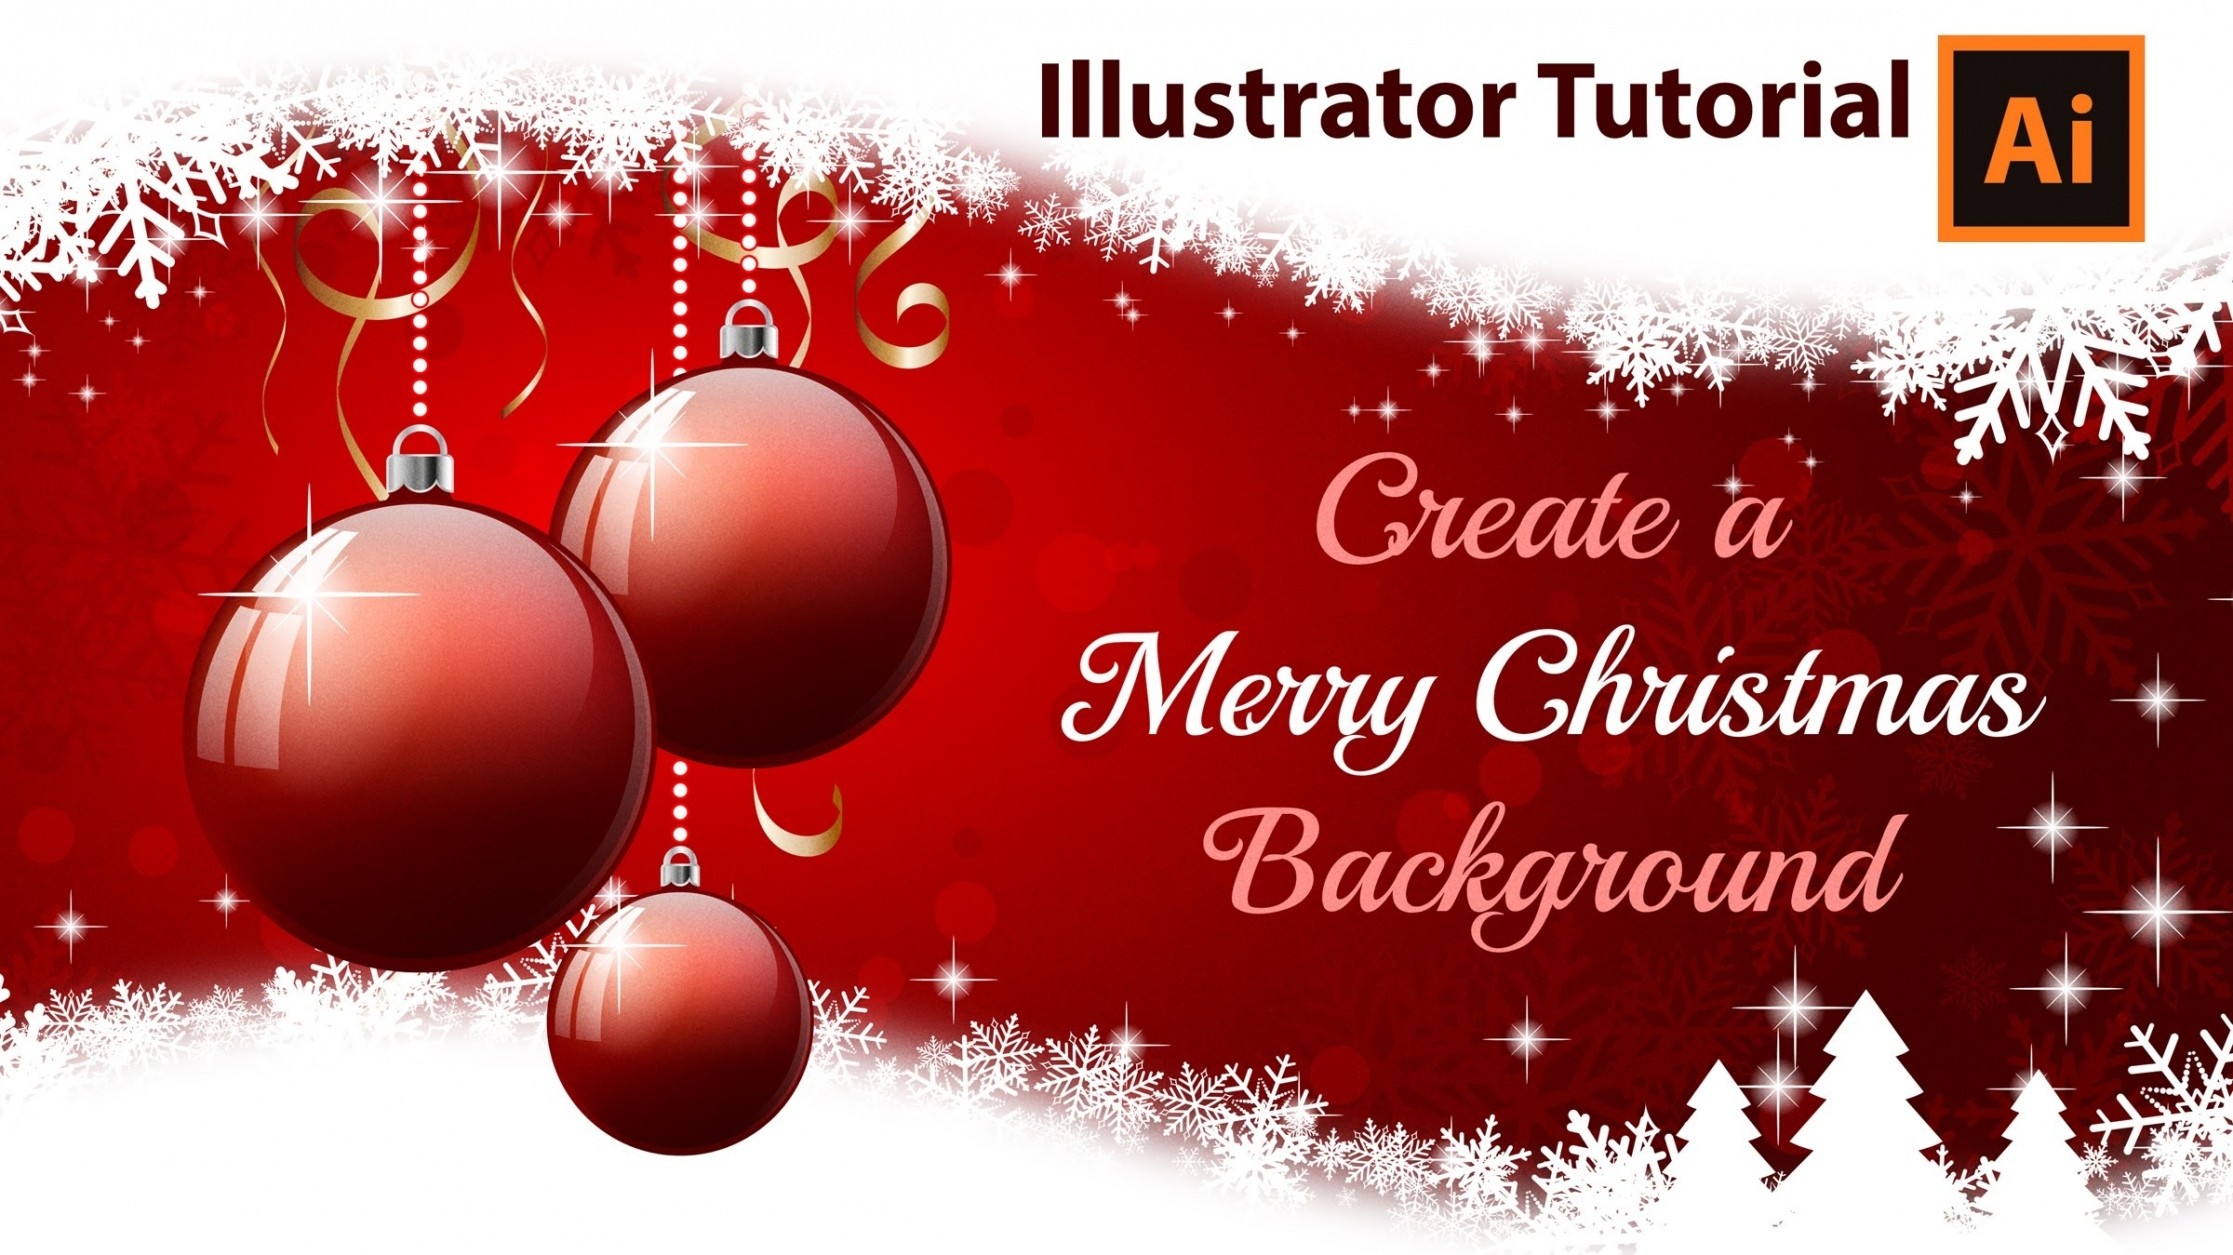 Adobe Illustrator Christmas Card Template Best Templates Ideas